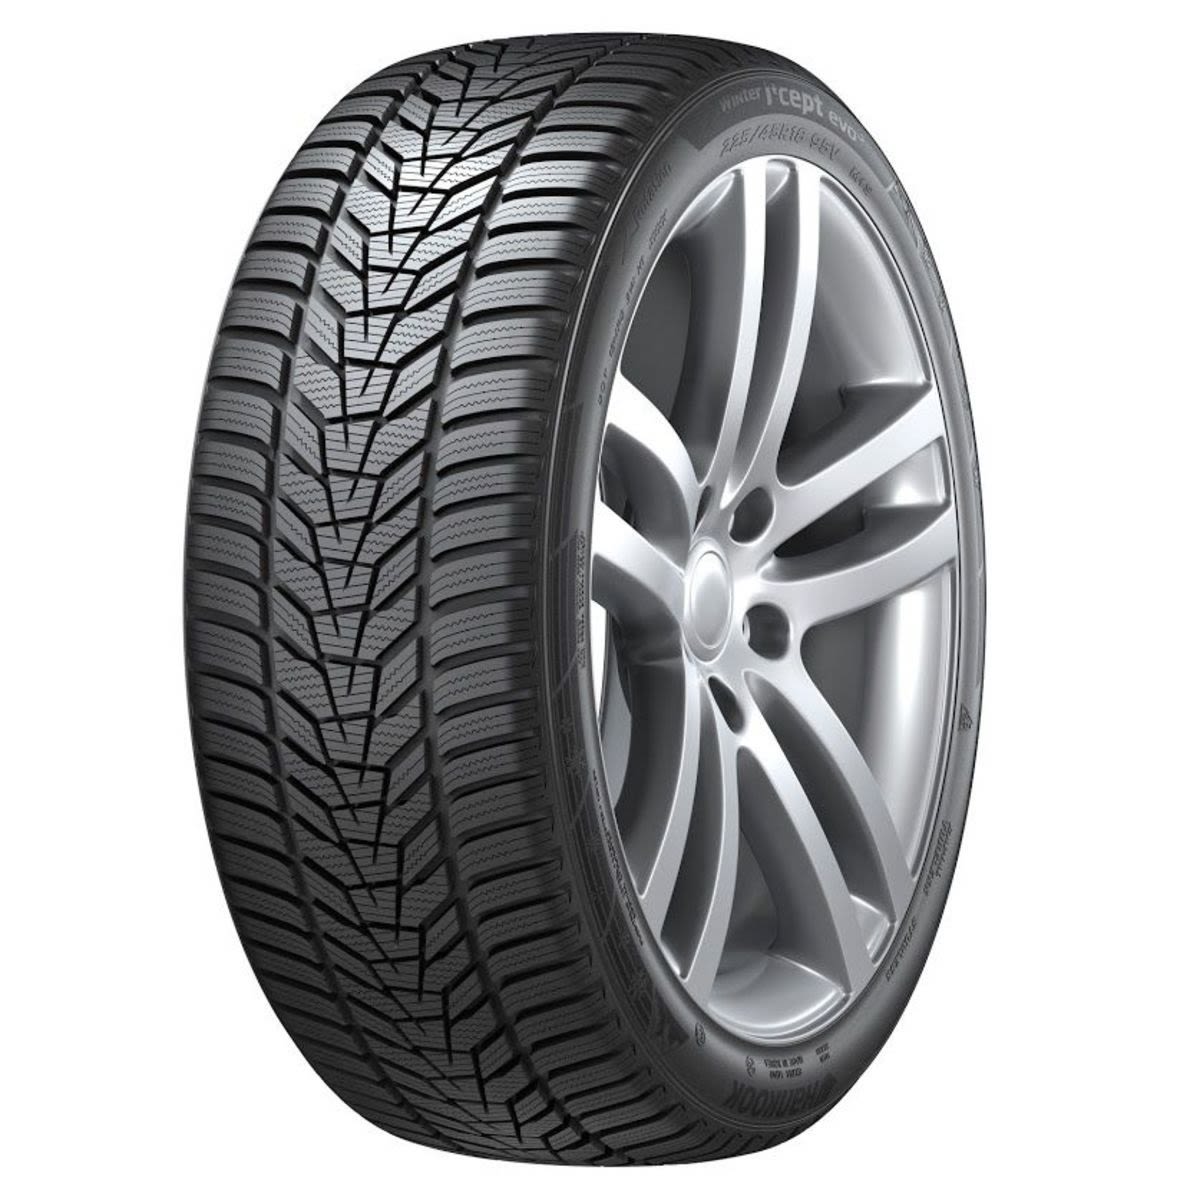 Neumáticos de invierno HANKOOK Winter i*cept evo3 W330 215/40R18 XL 89V